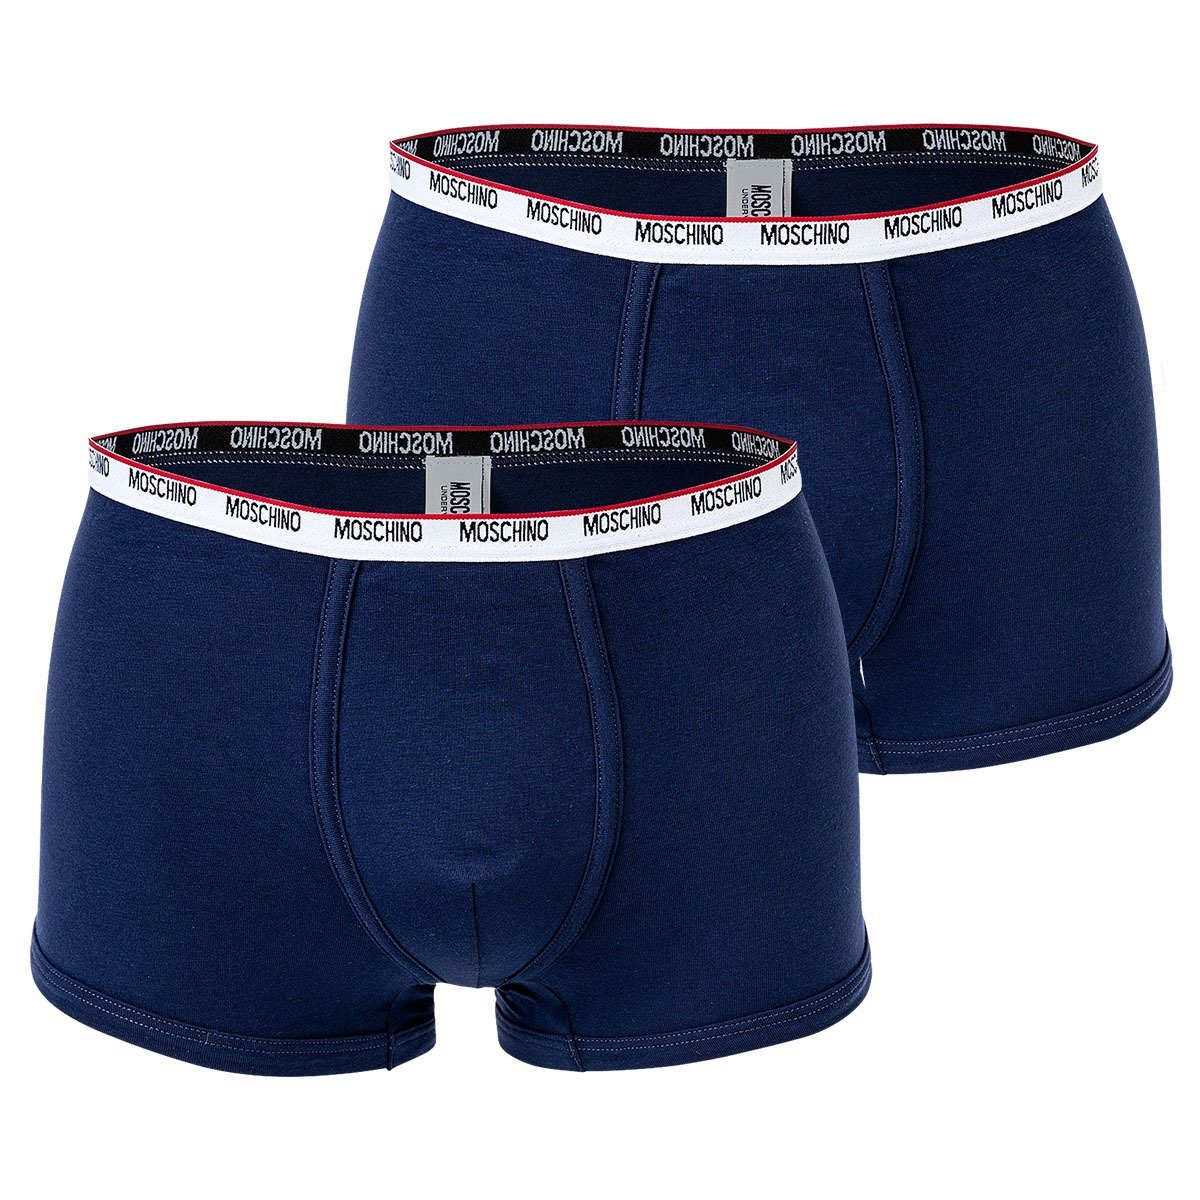 Moschino Boxer Herren Shorts 2er Pack - Trunks, Unterhose, Cotton Blau